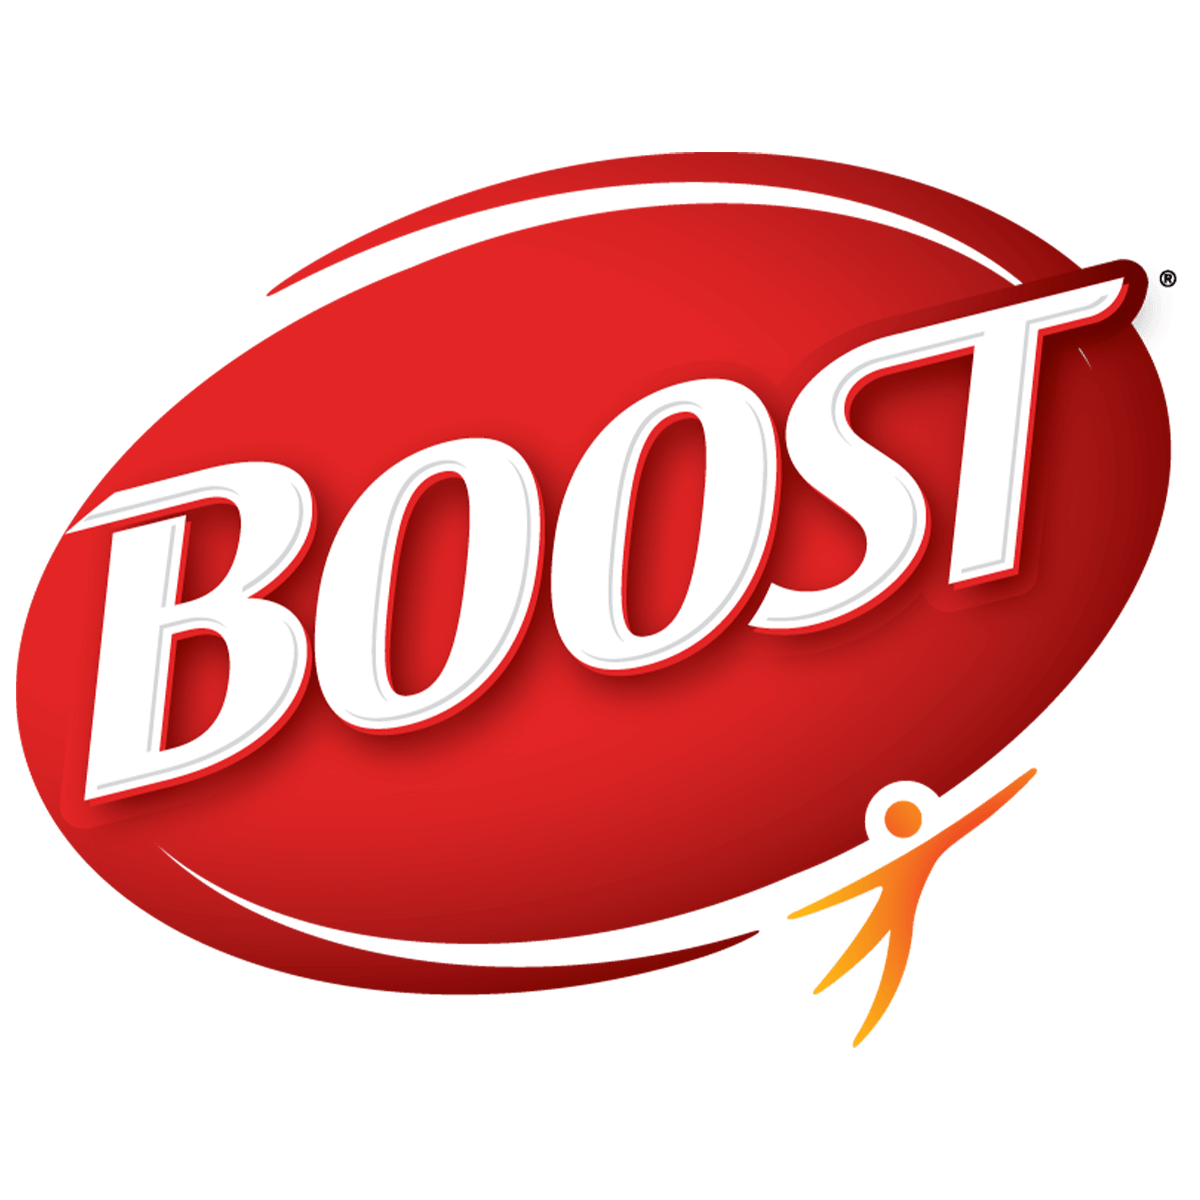 Boost brand logo